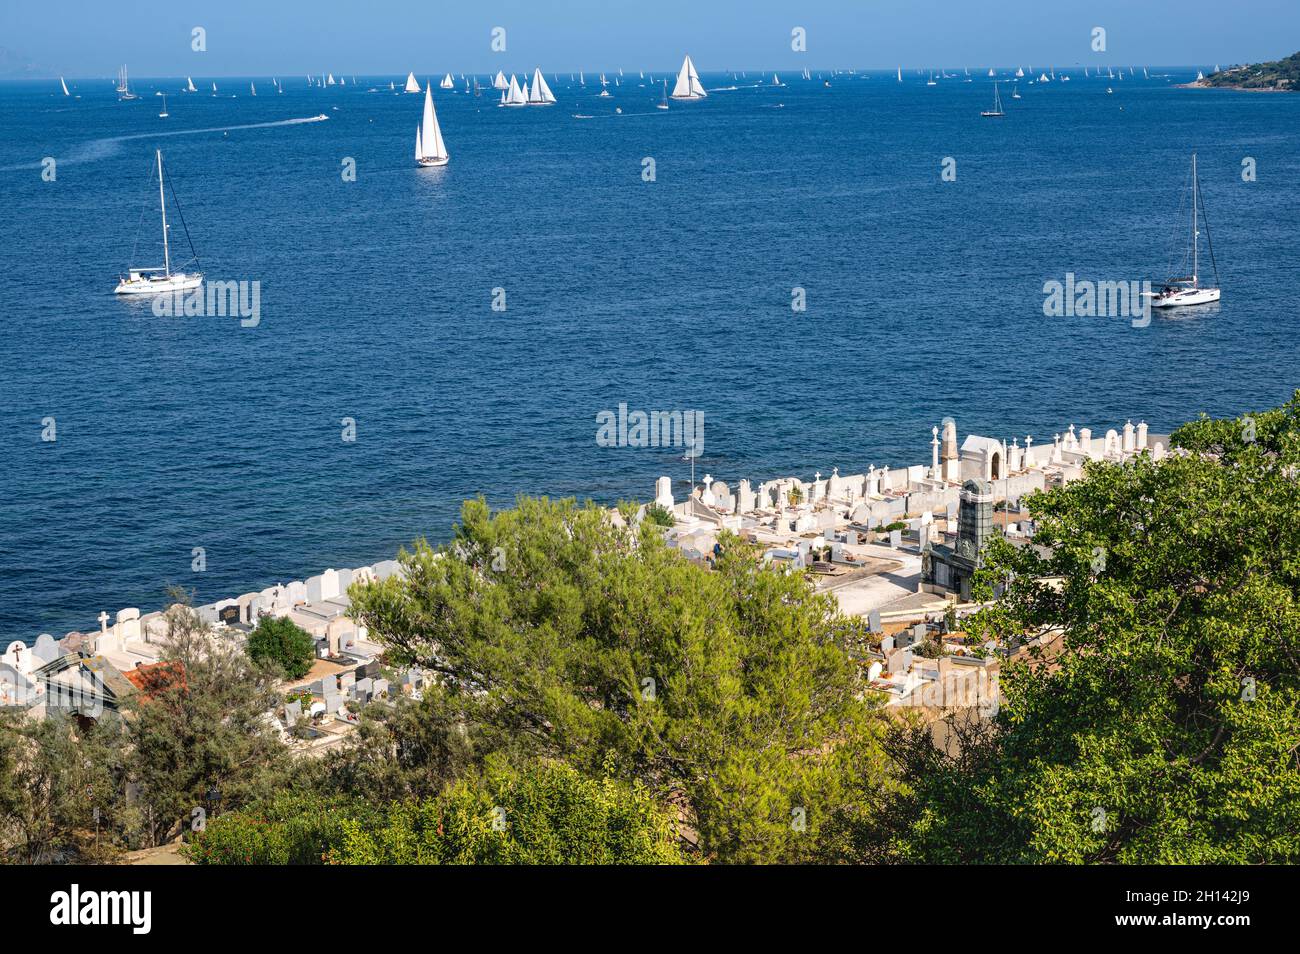 The seafarer's cemetery of Saint-Tropez at the Côte d'Azur, France Stock Photo